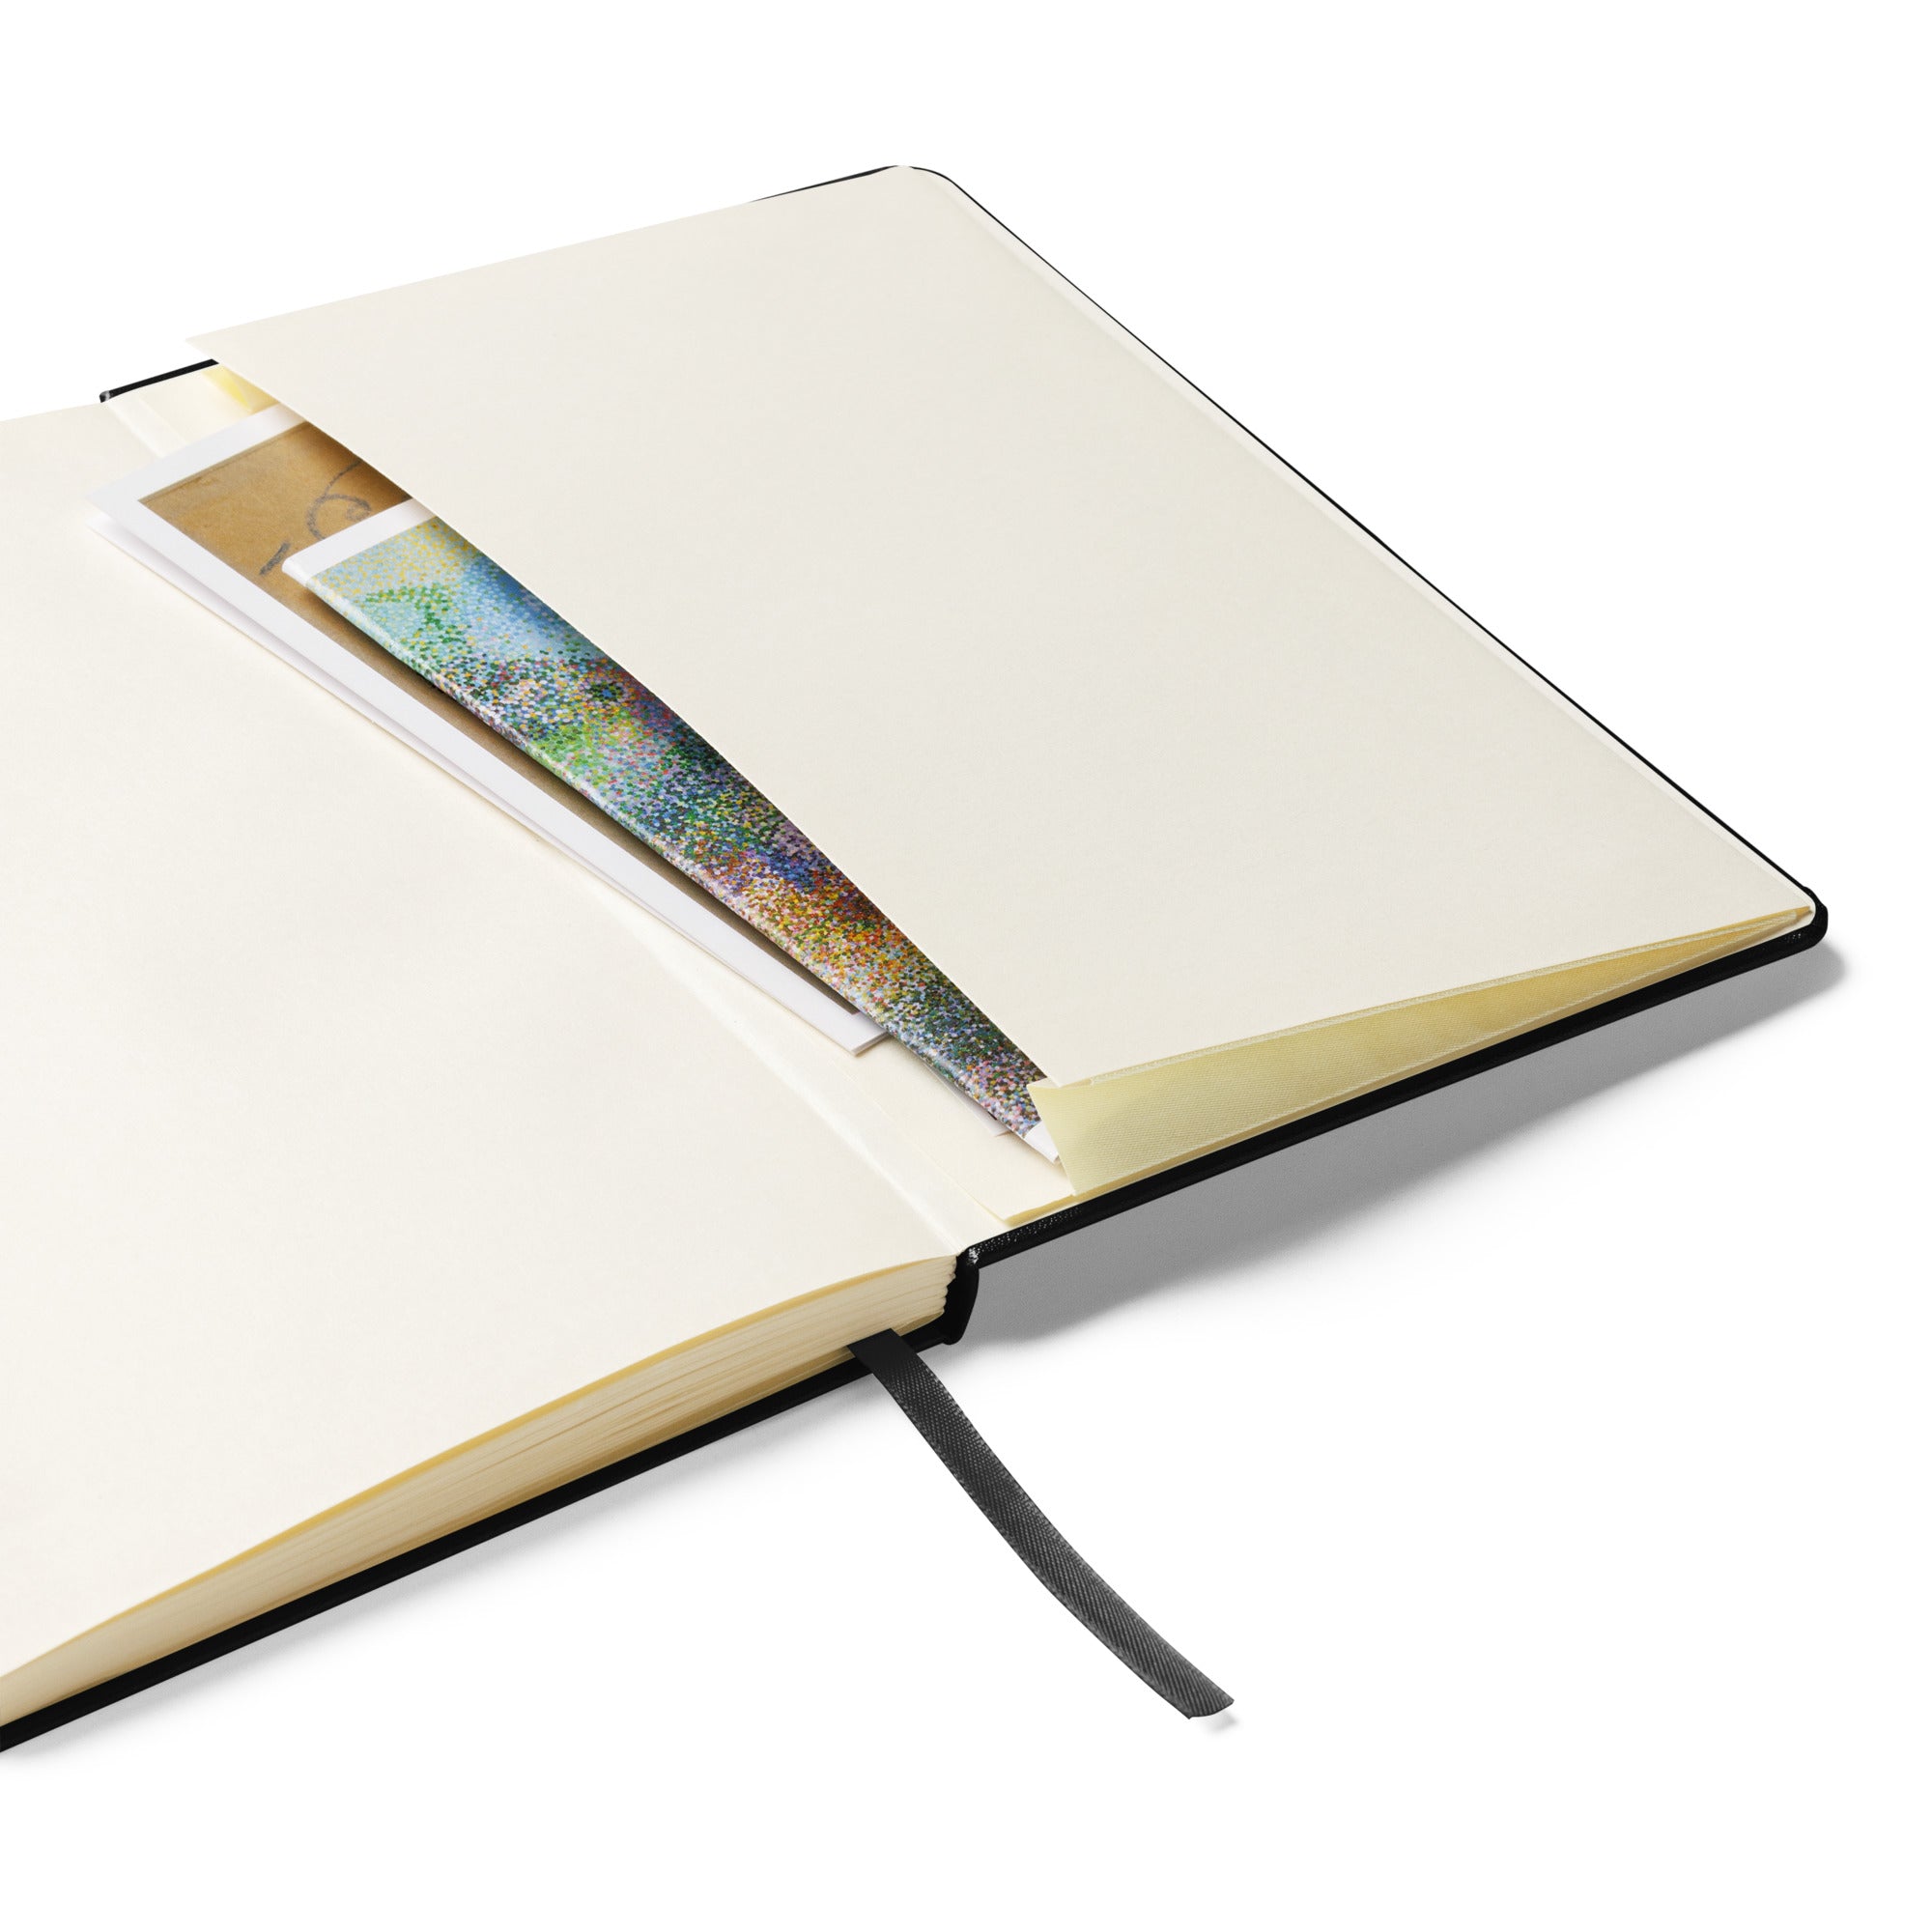 Rhino ATL Hardcover bound notebook